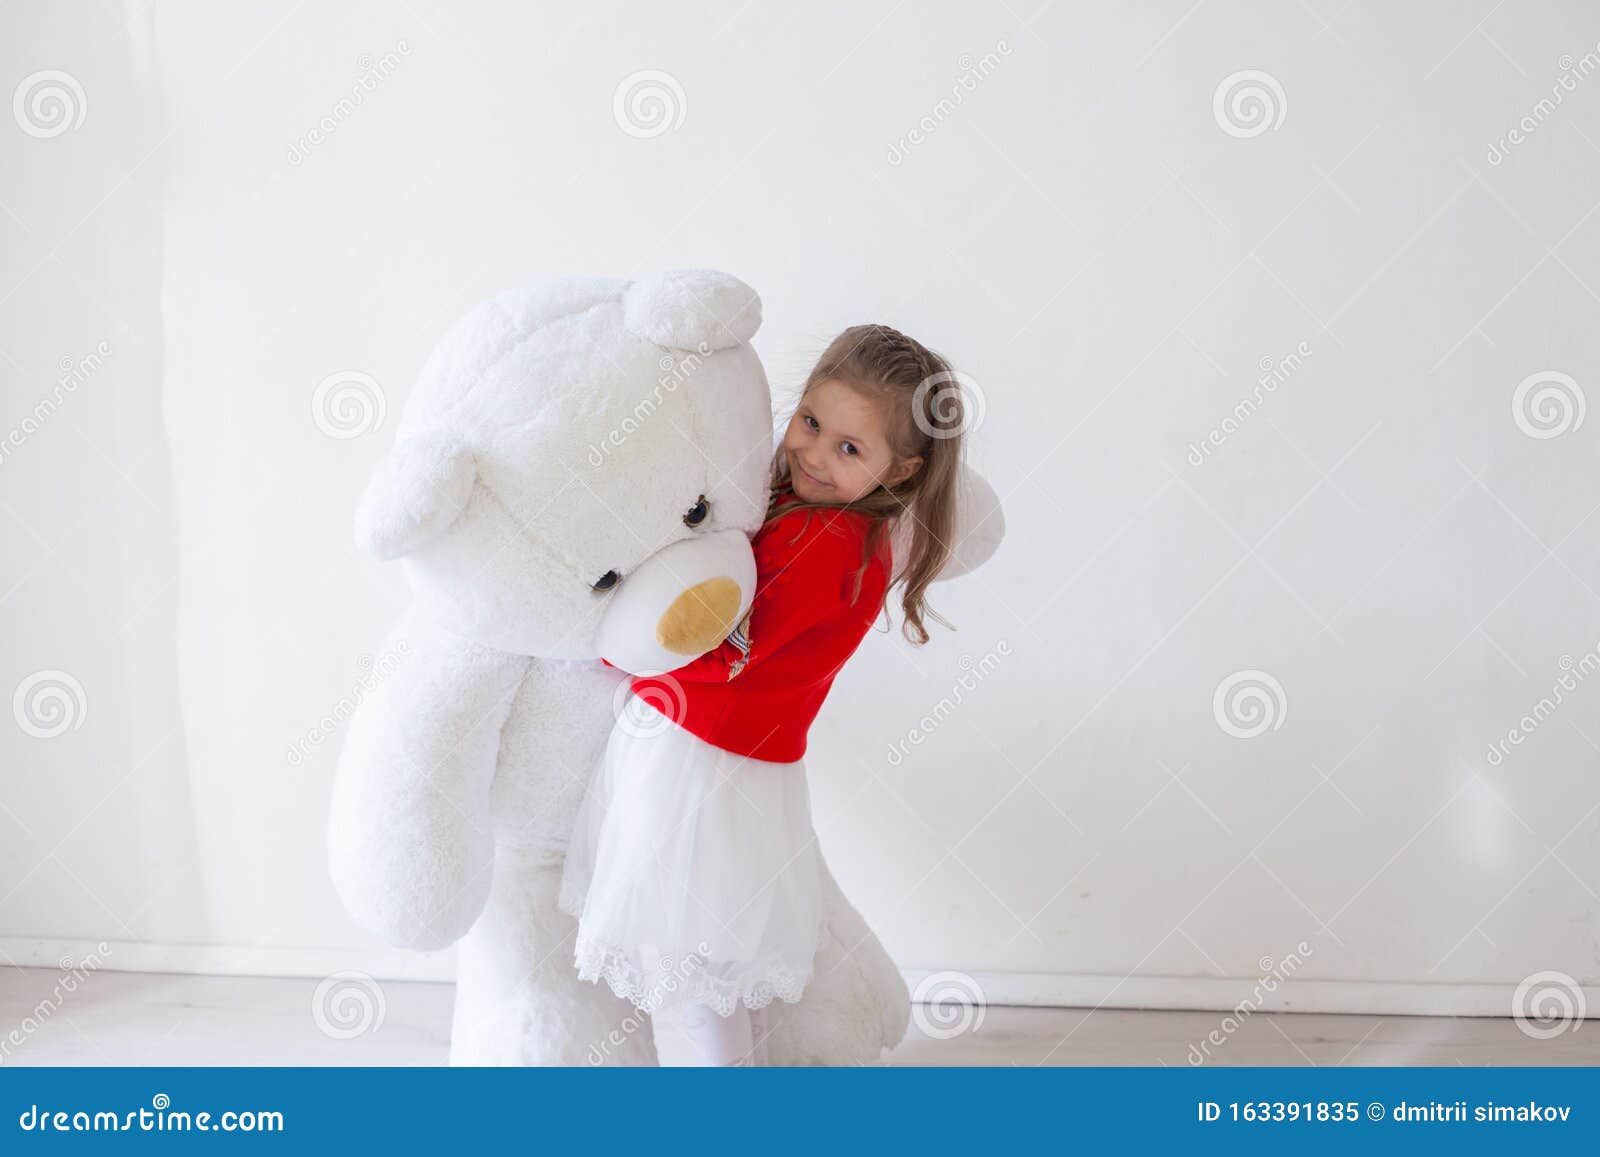 Beautiful Little Girl with Toy Big Teddy Bear Stock Image - Image ...